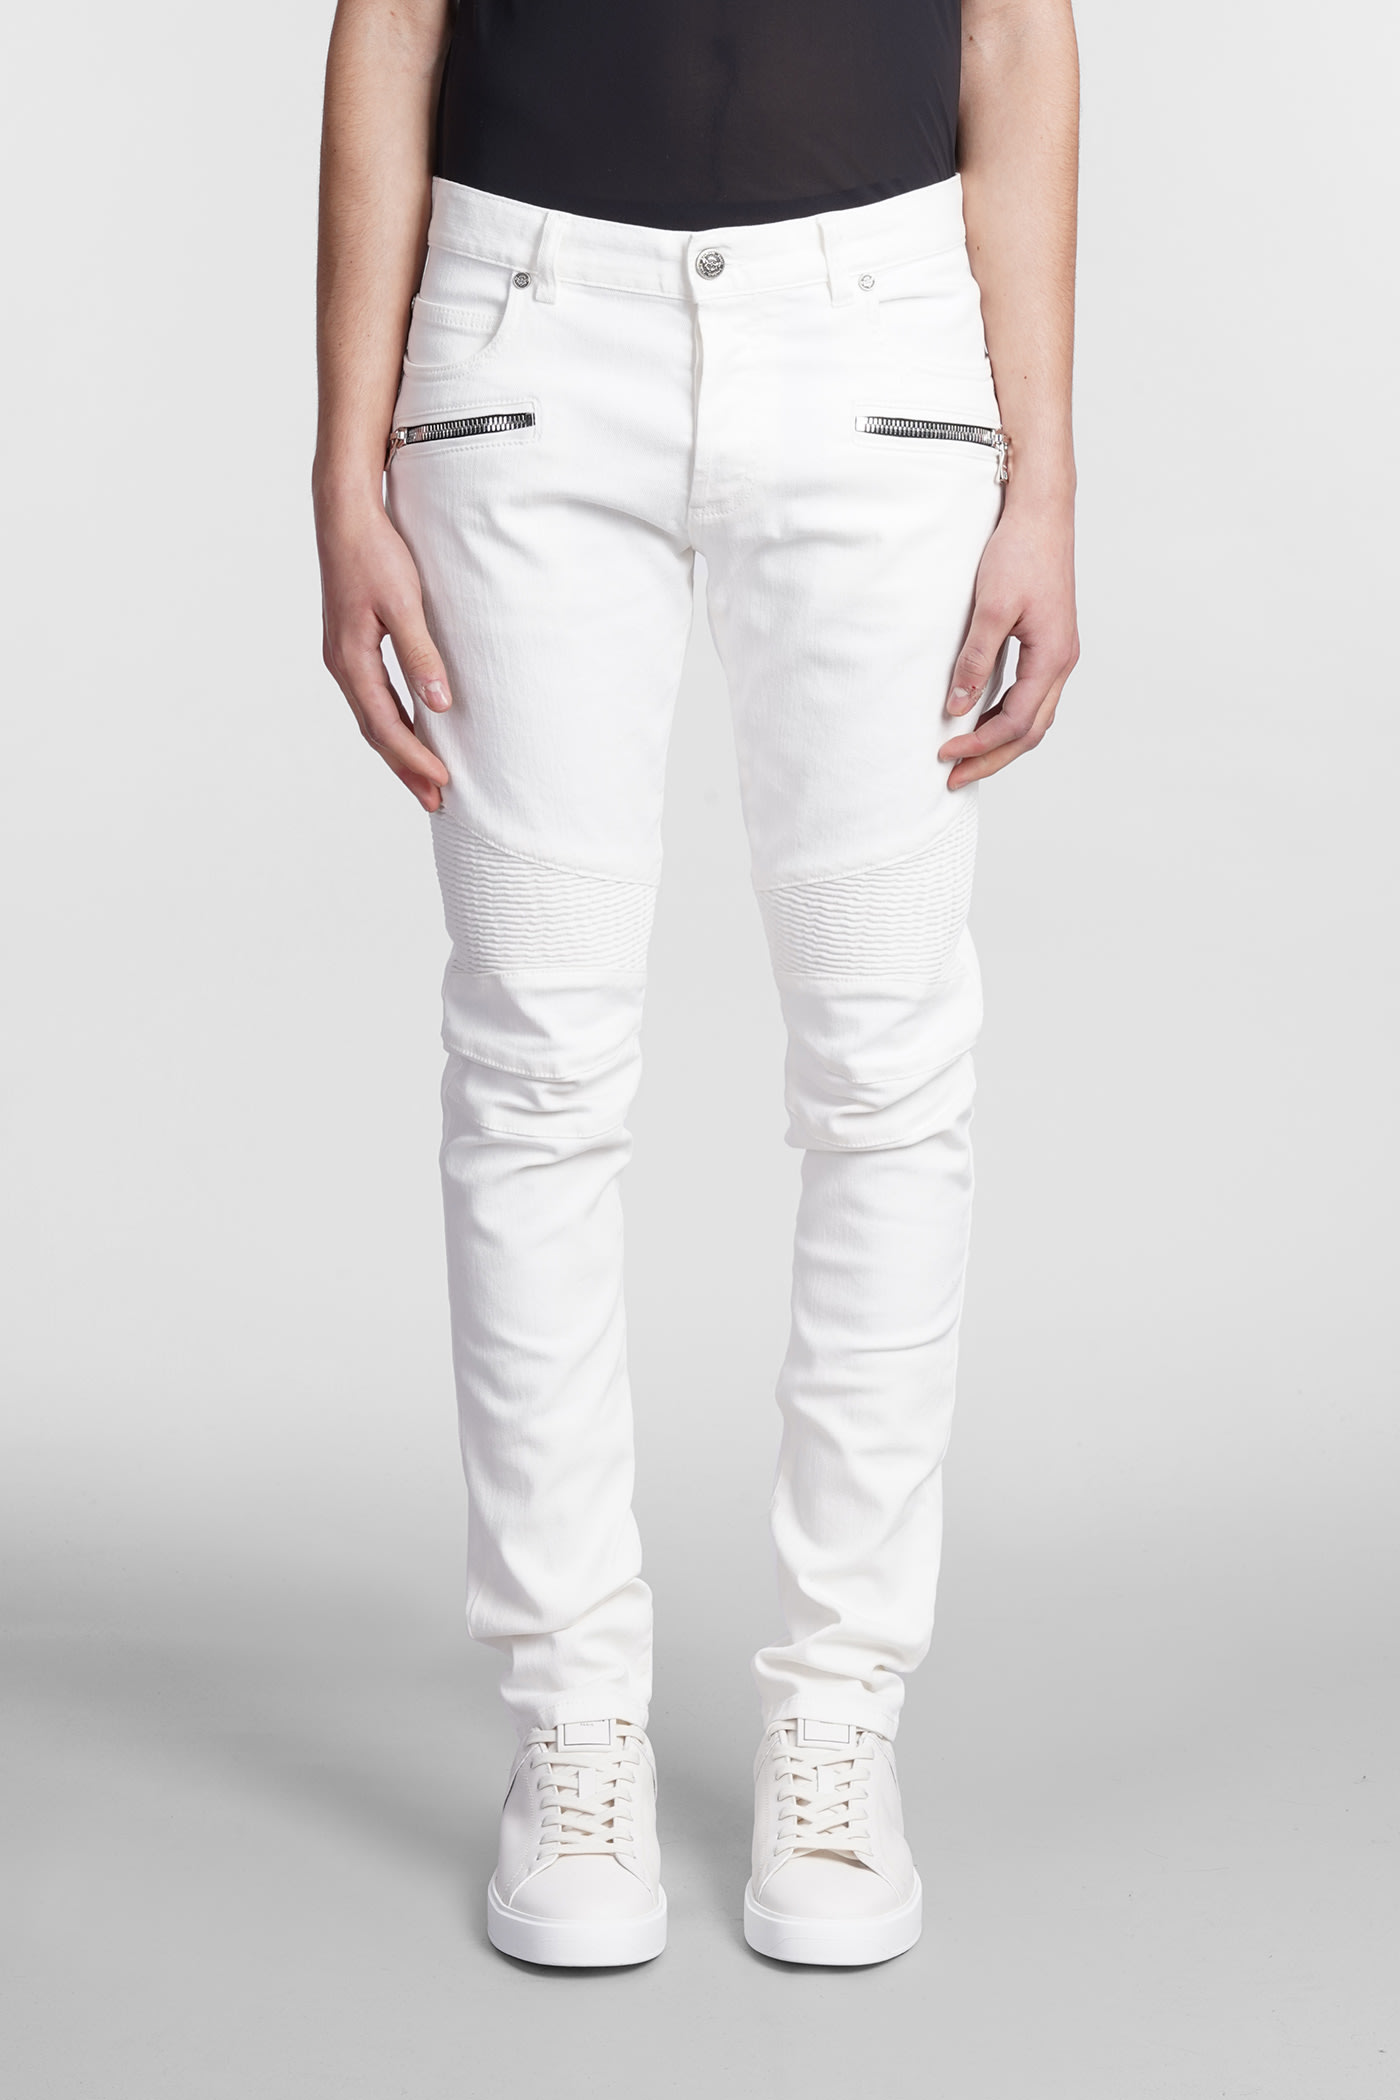 Balmain White Panelled Jeans |